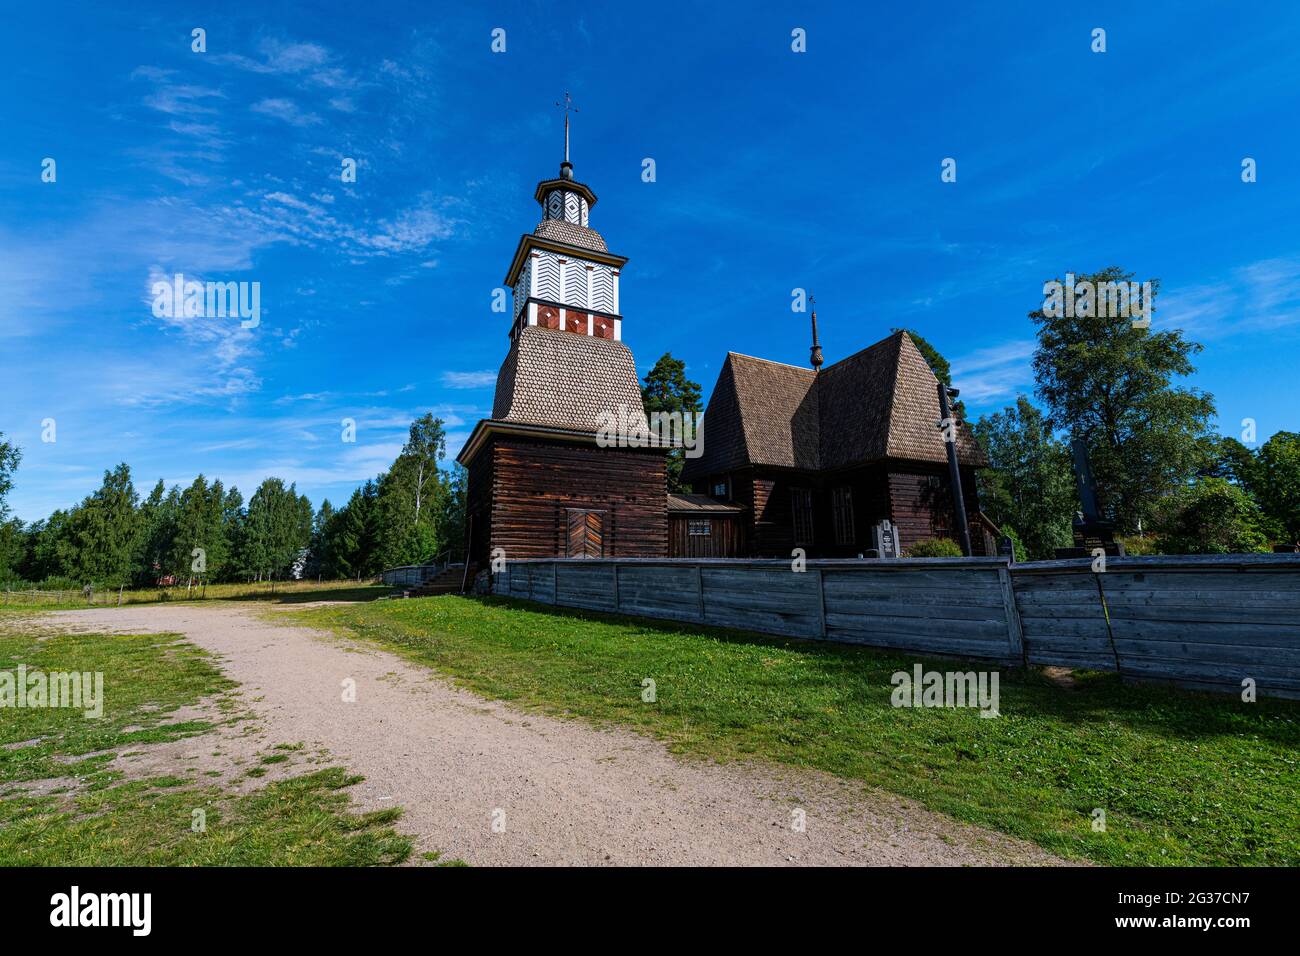 Unesco world heritage site Petaejeveden wooden church, Finland Stock Photo